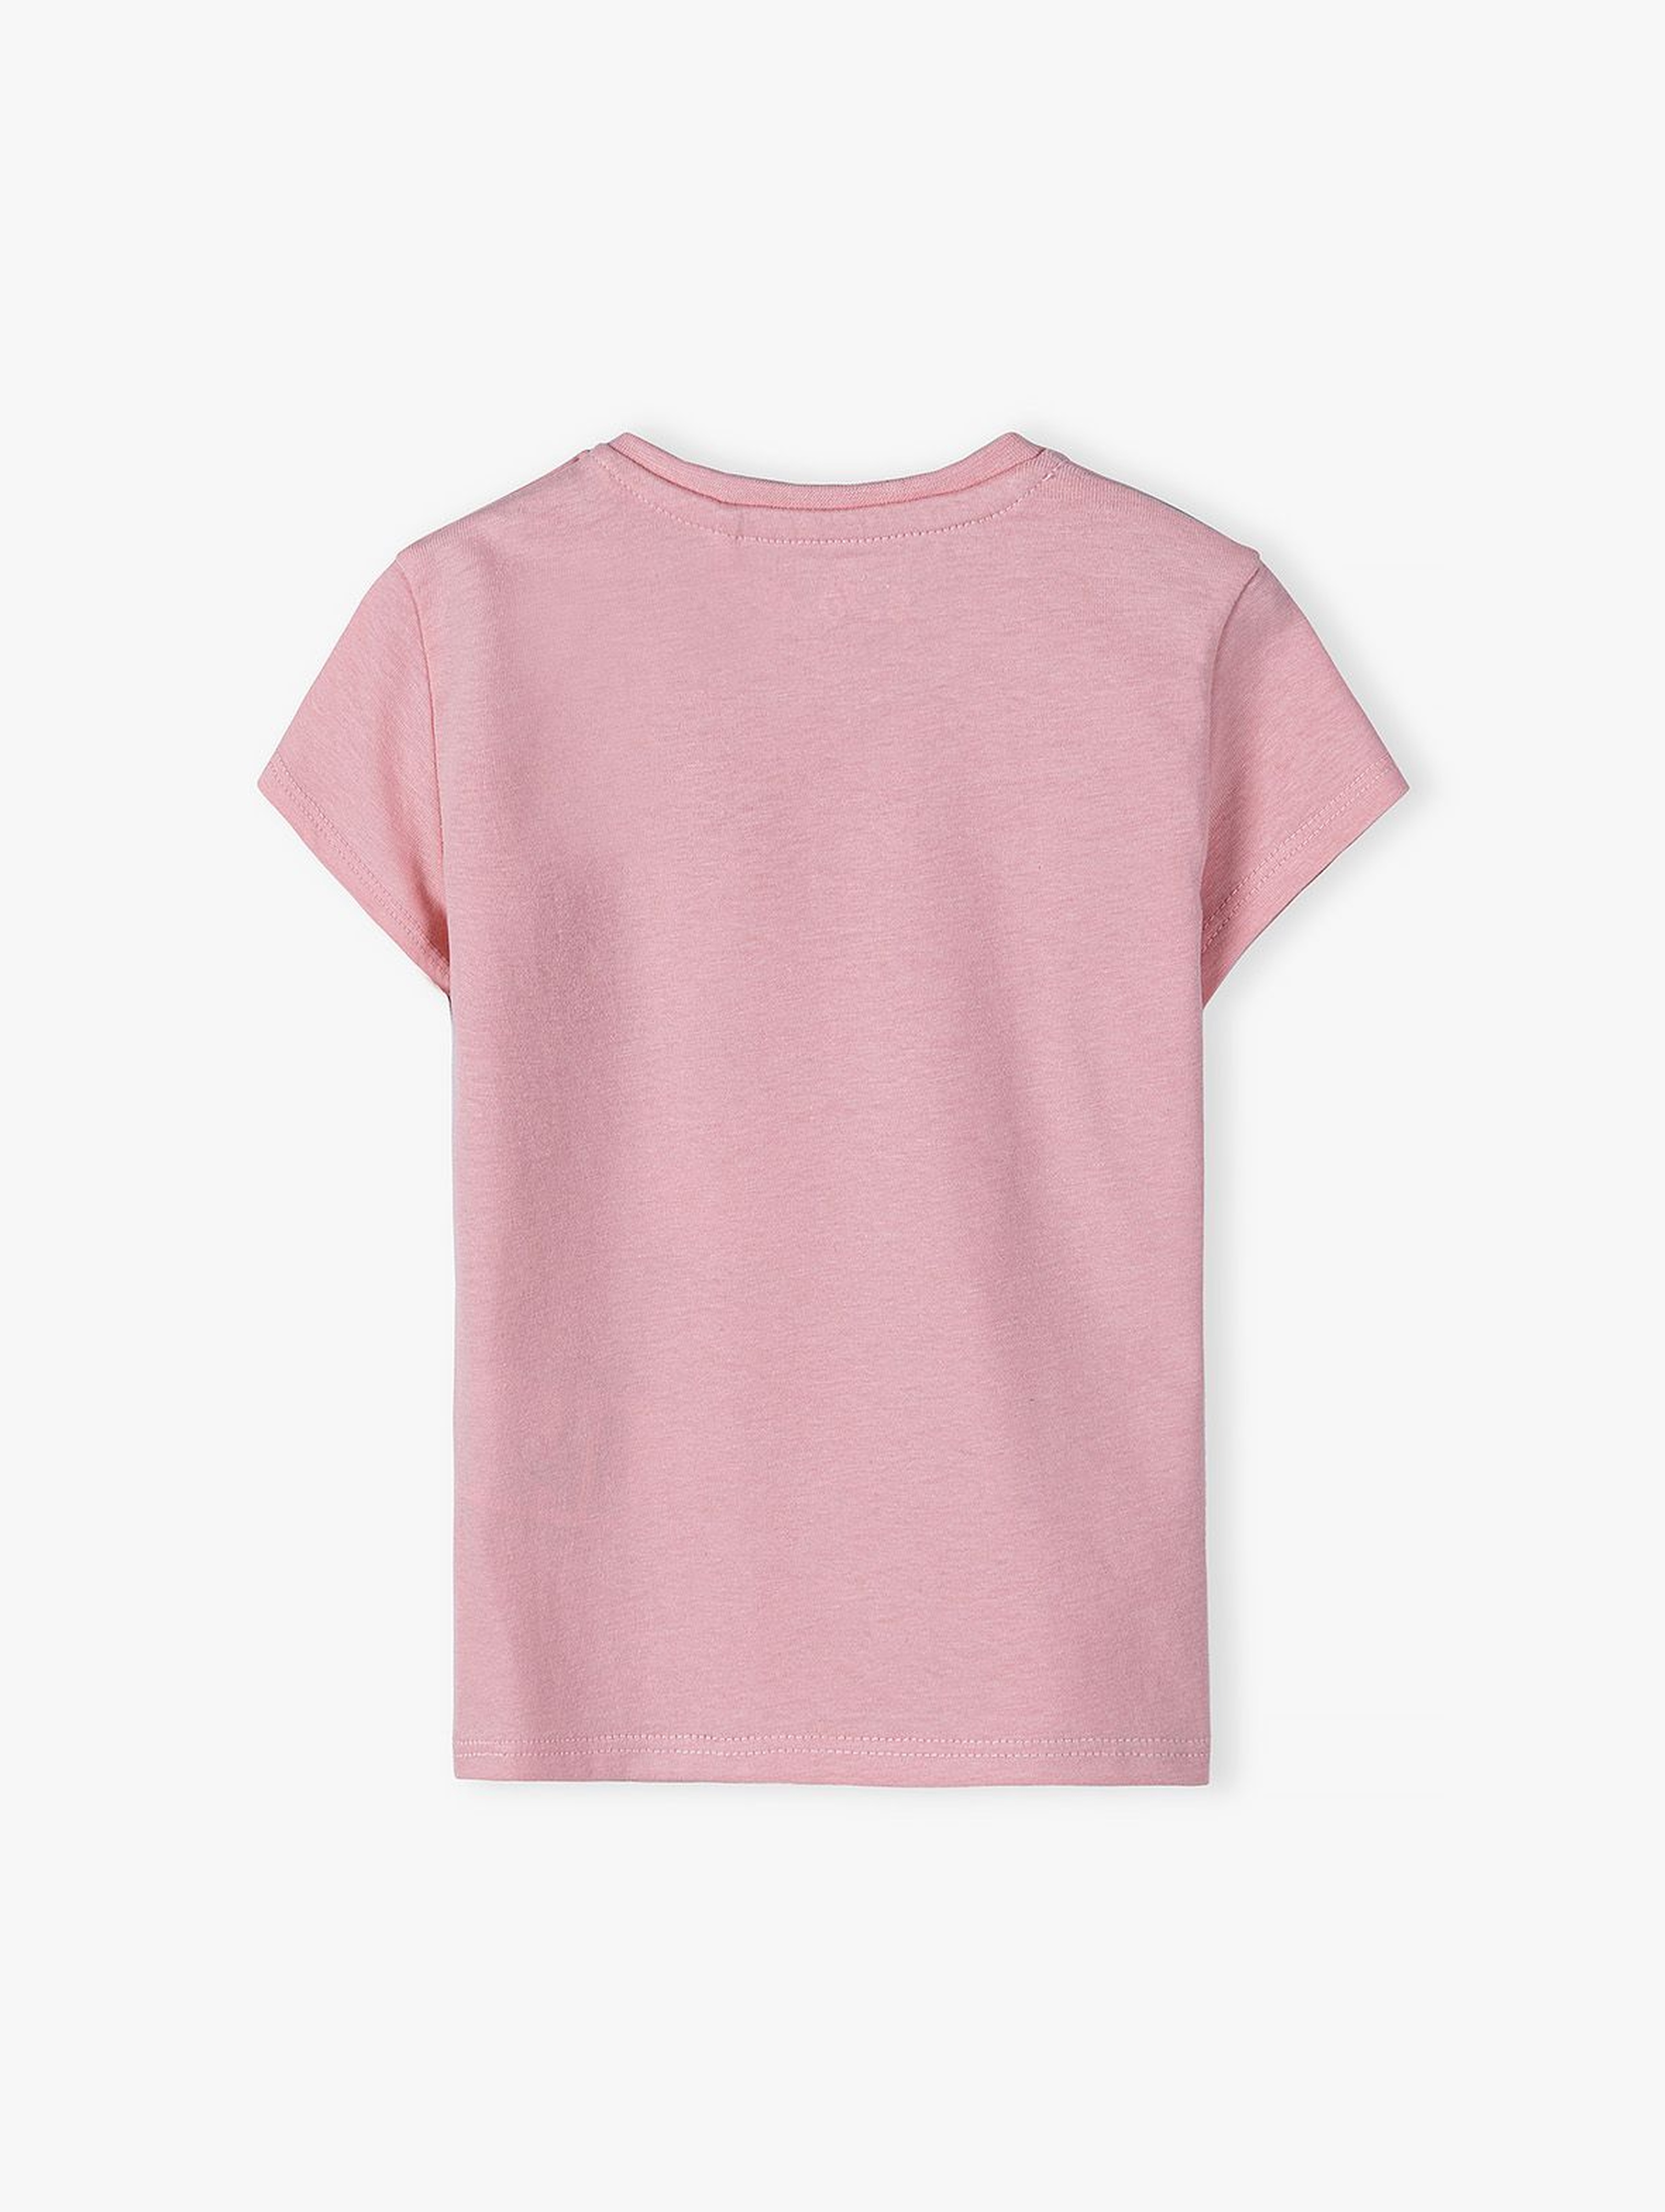 Bawełniany T-shirt dla niemowlaka - Cud natury